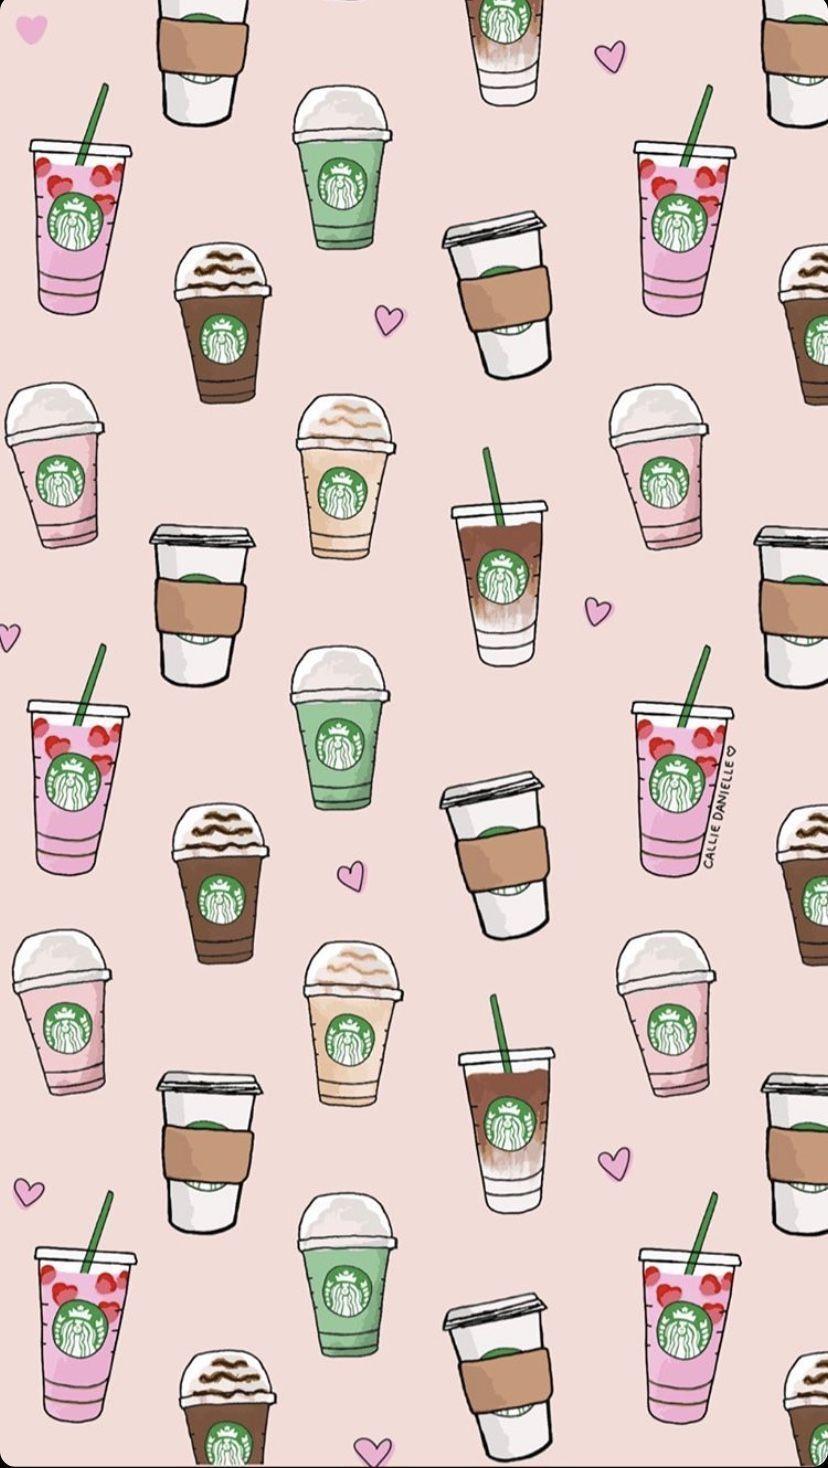 Cute Starbucks iPhone Wallpapers - Top Free Cute Starbucks iPhone